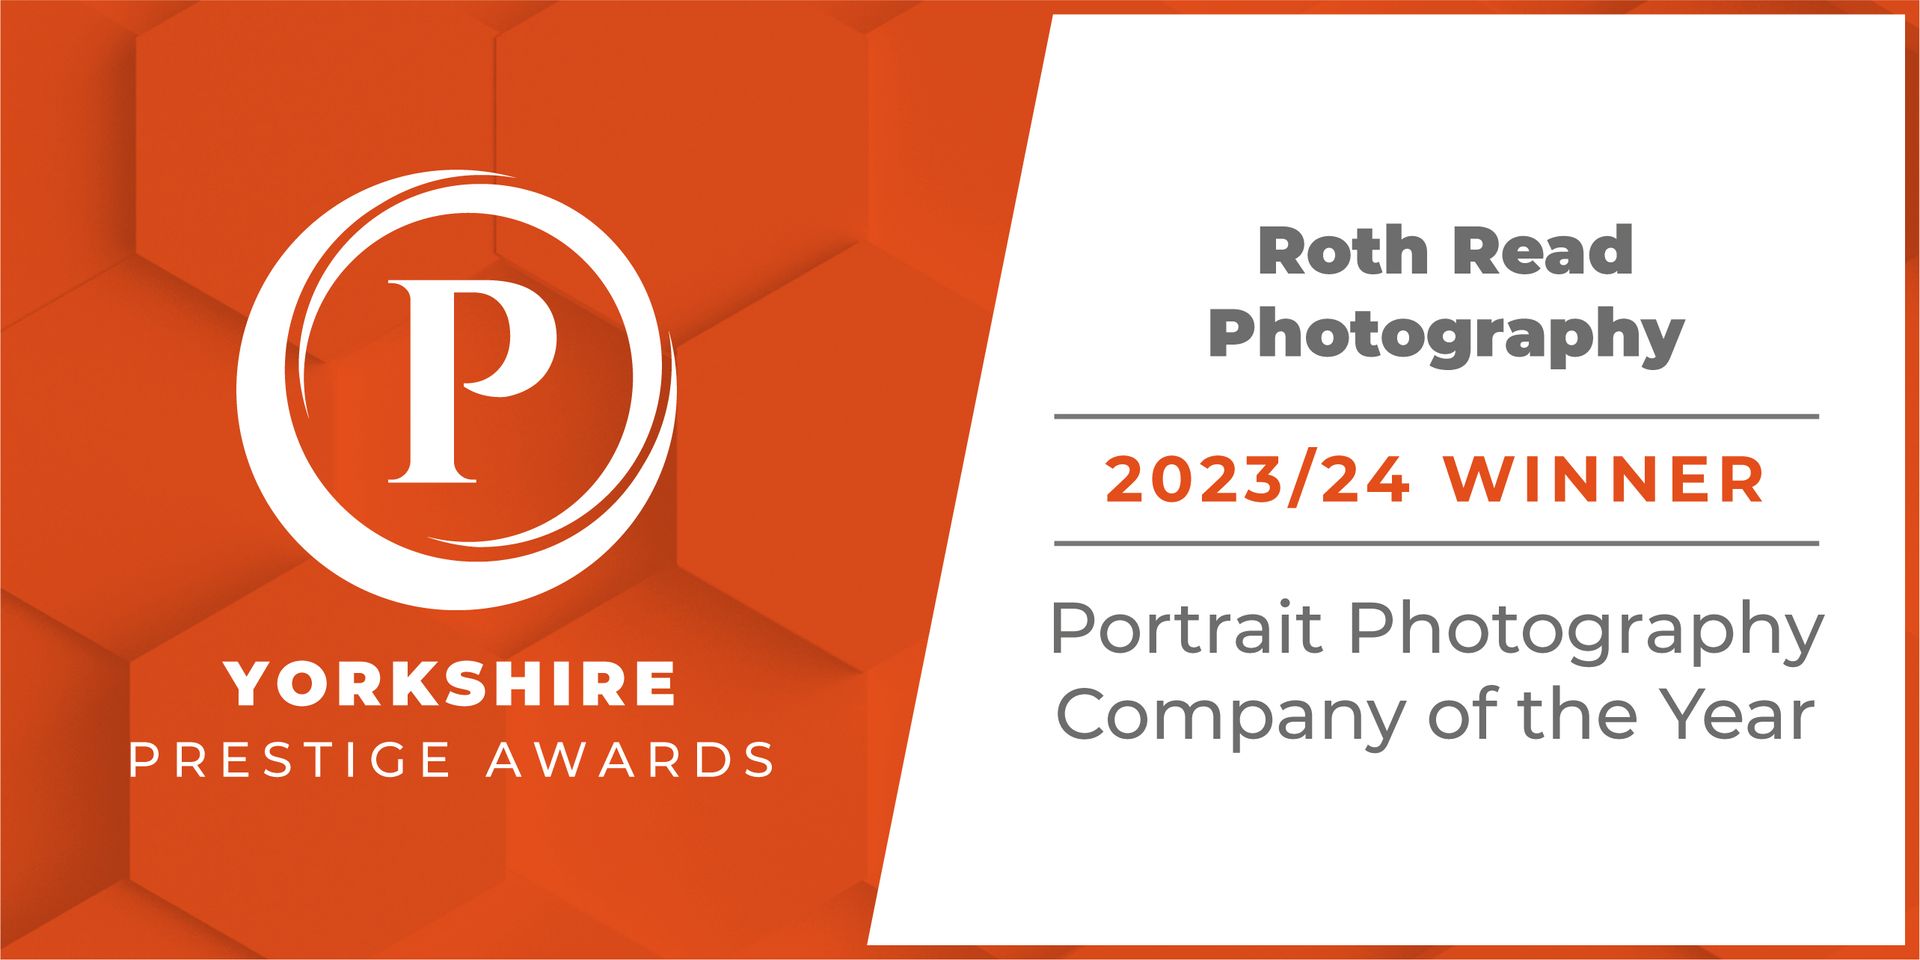 Roth Read Photography photographers of the year award logo